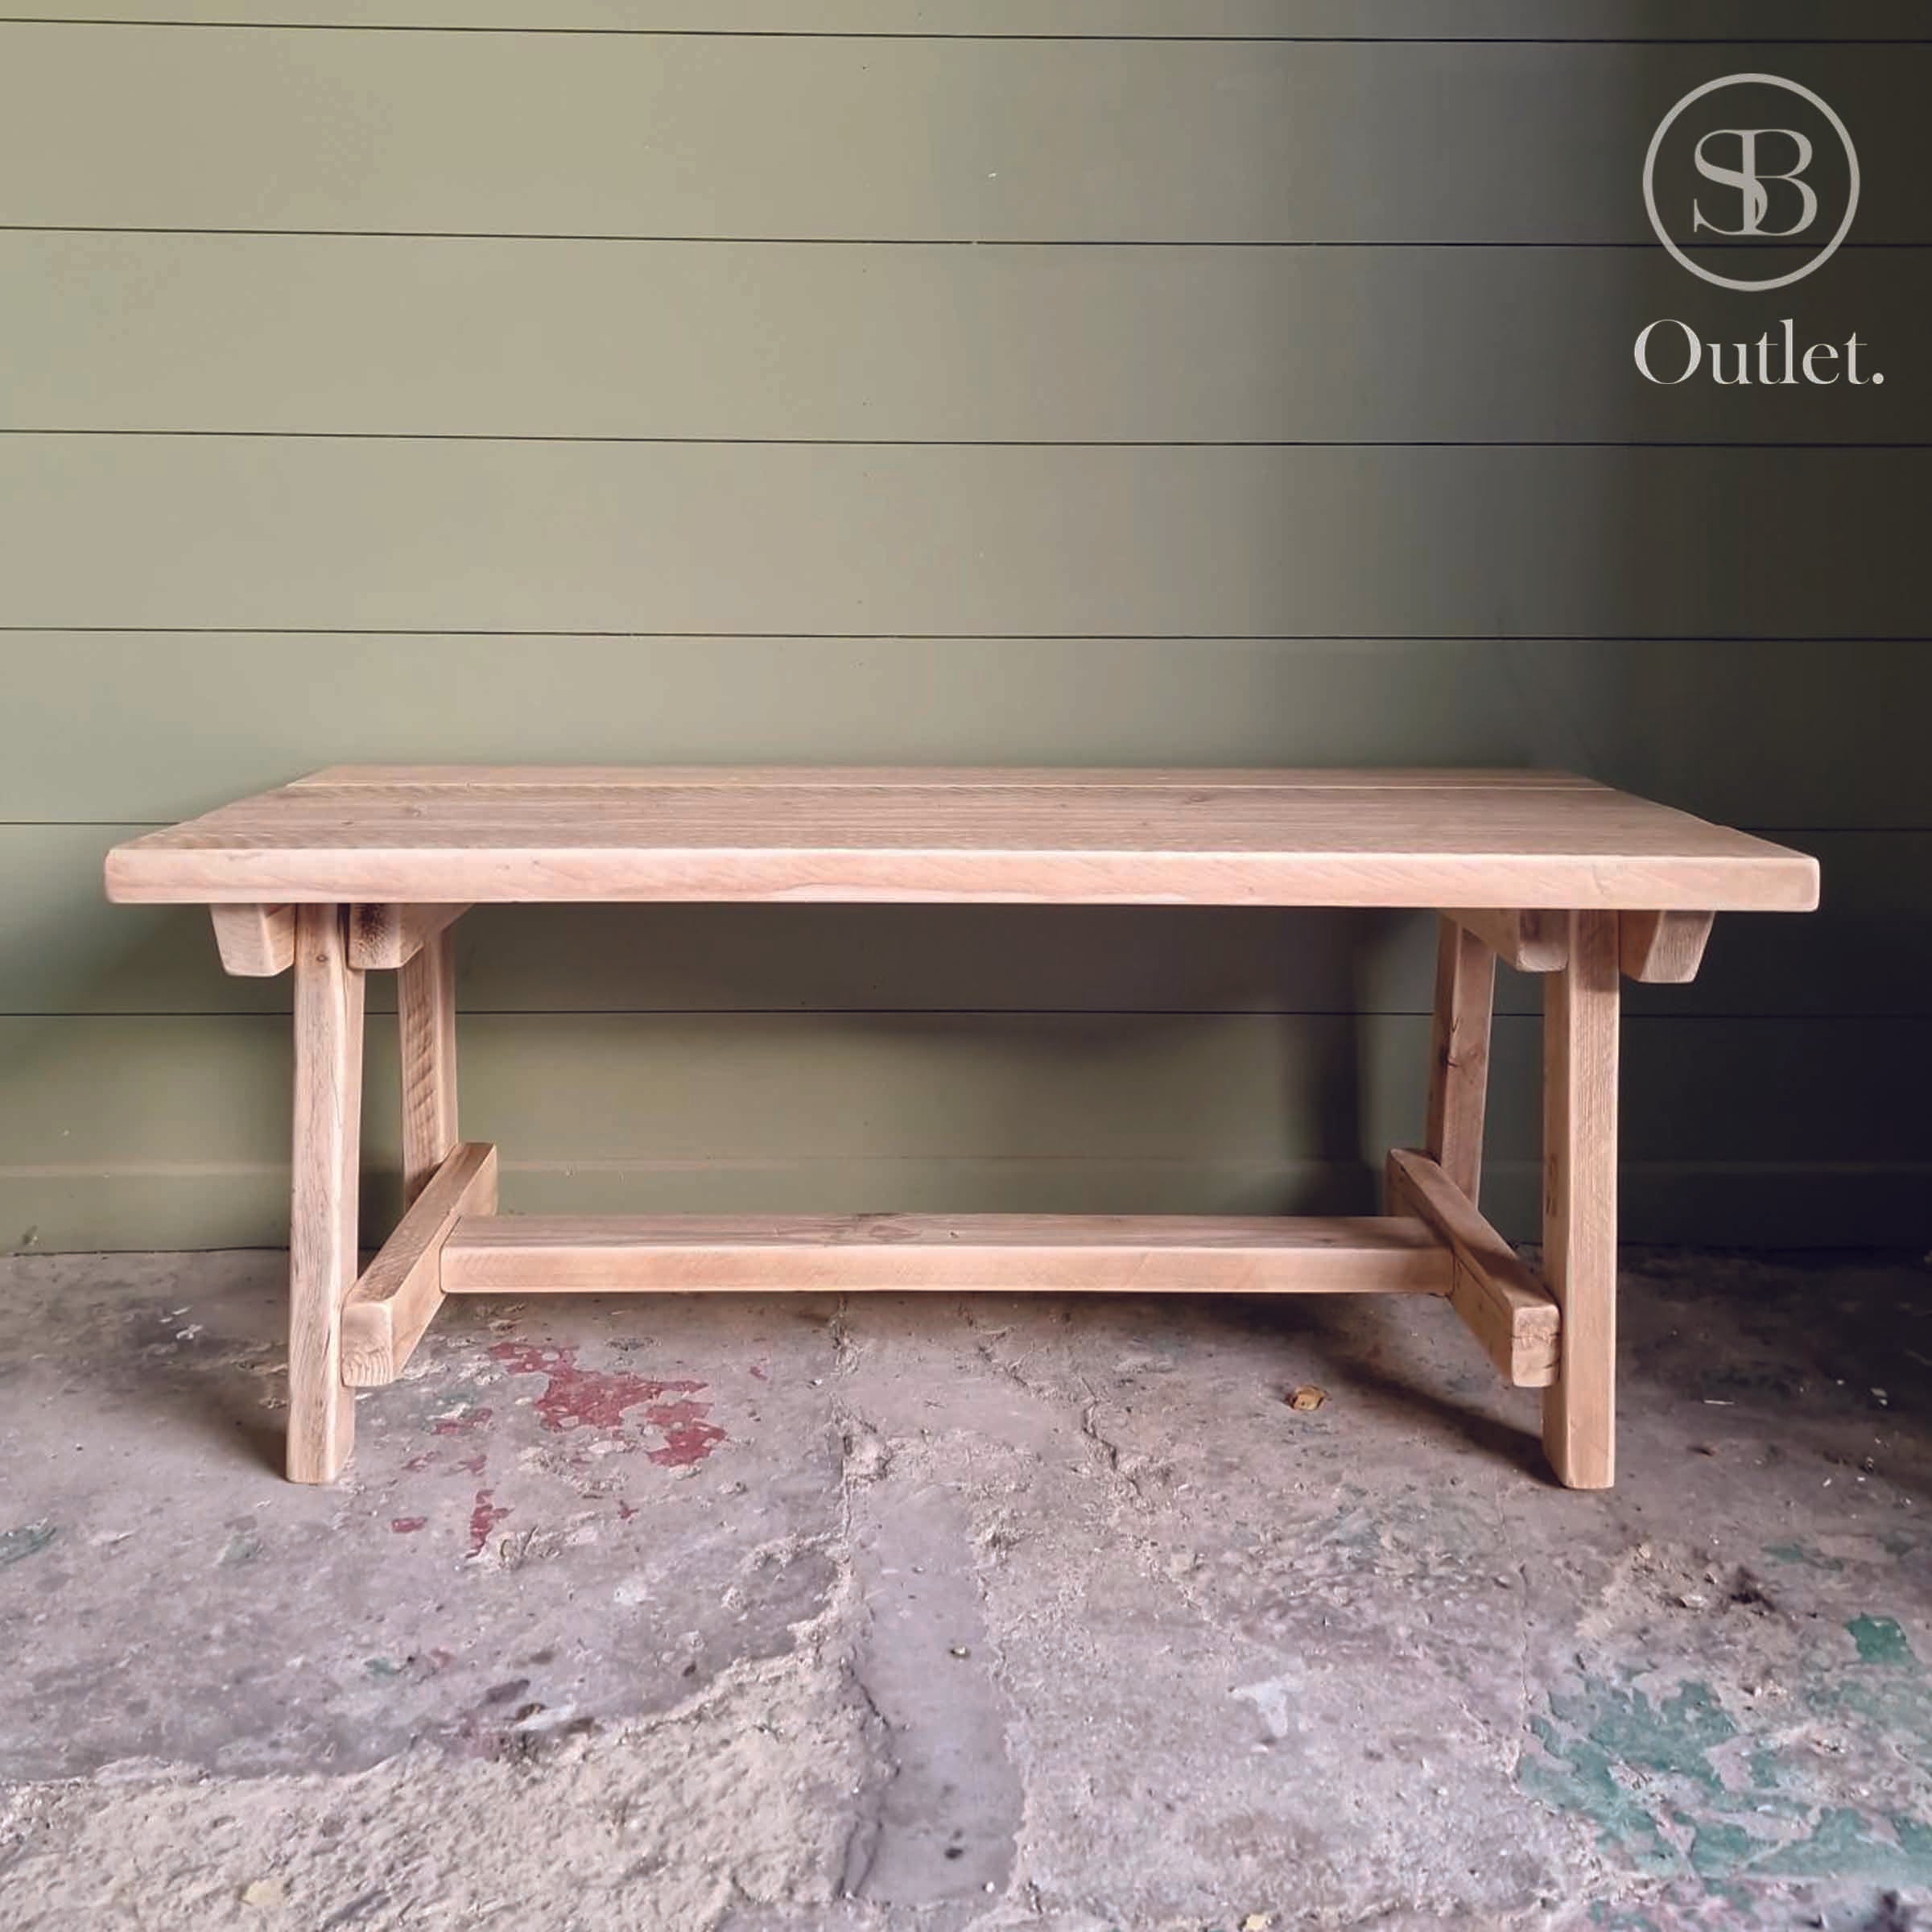 Splay Coffee Table (Custom no shelf design) - 120cm Long x 54cm Deep - Natural